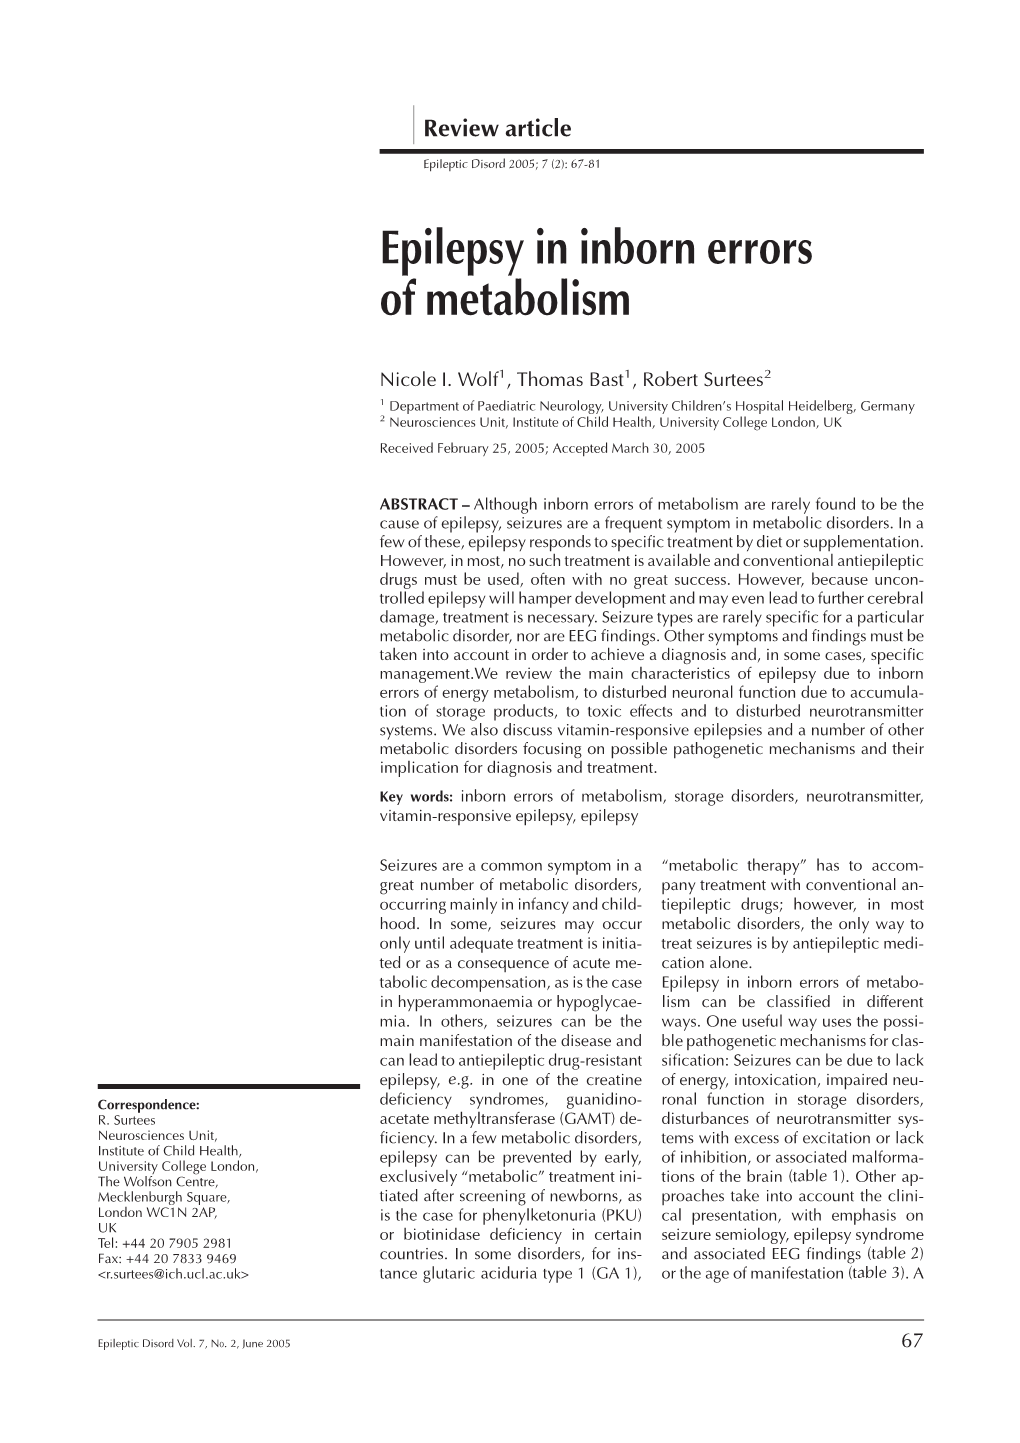 Epilepsy in Inborn Errors of Metabolism